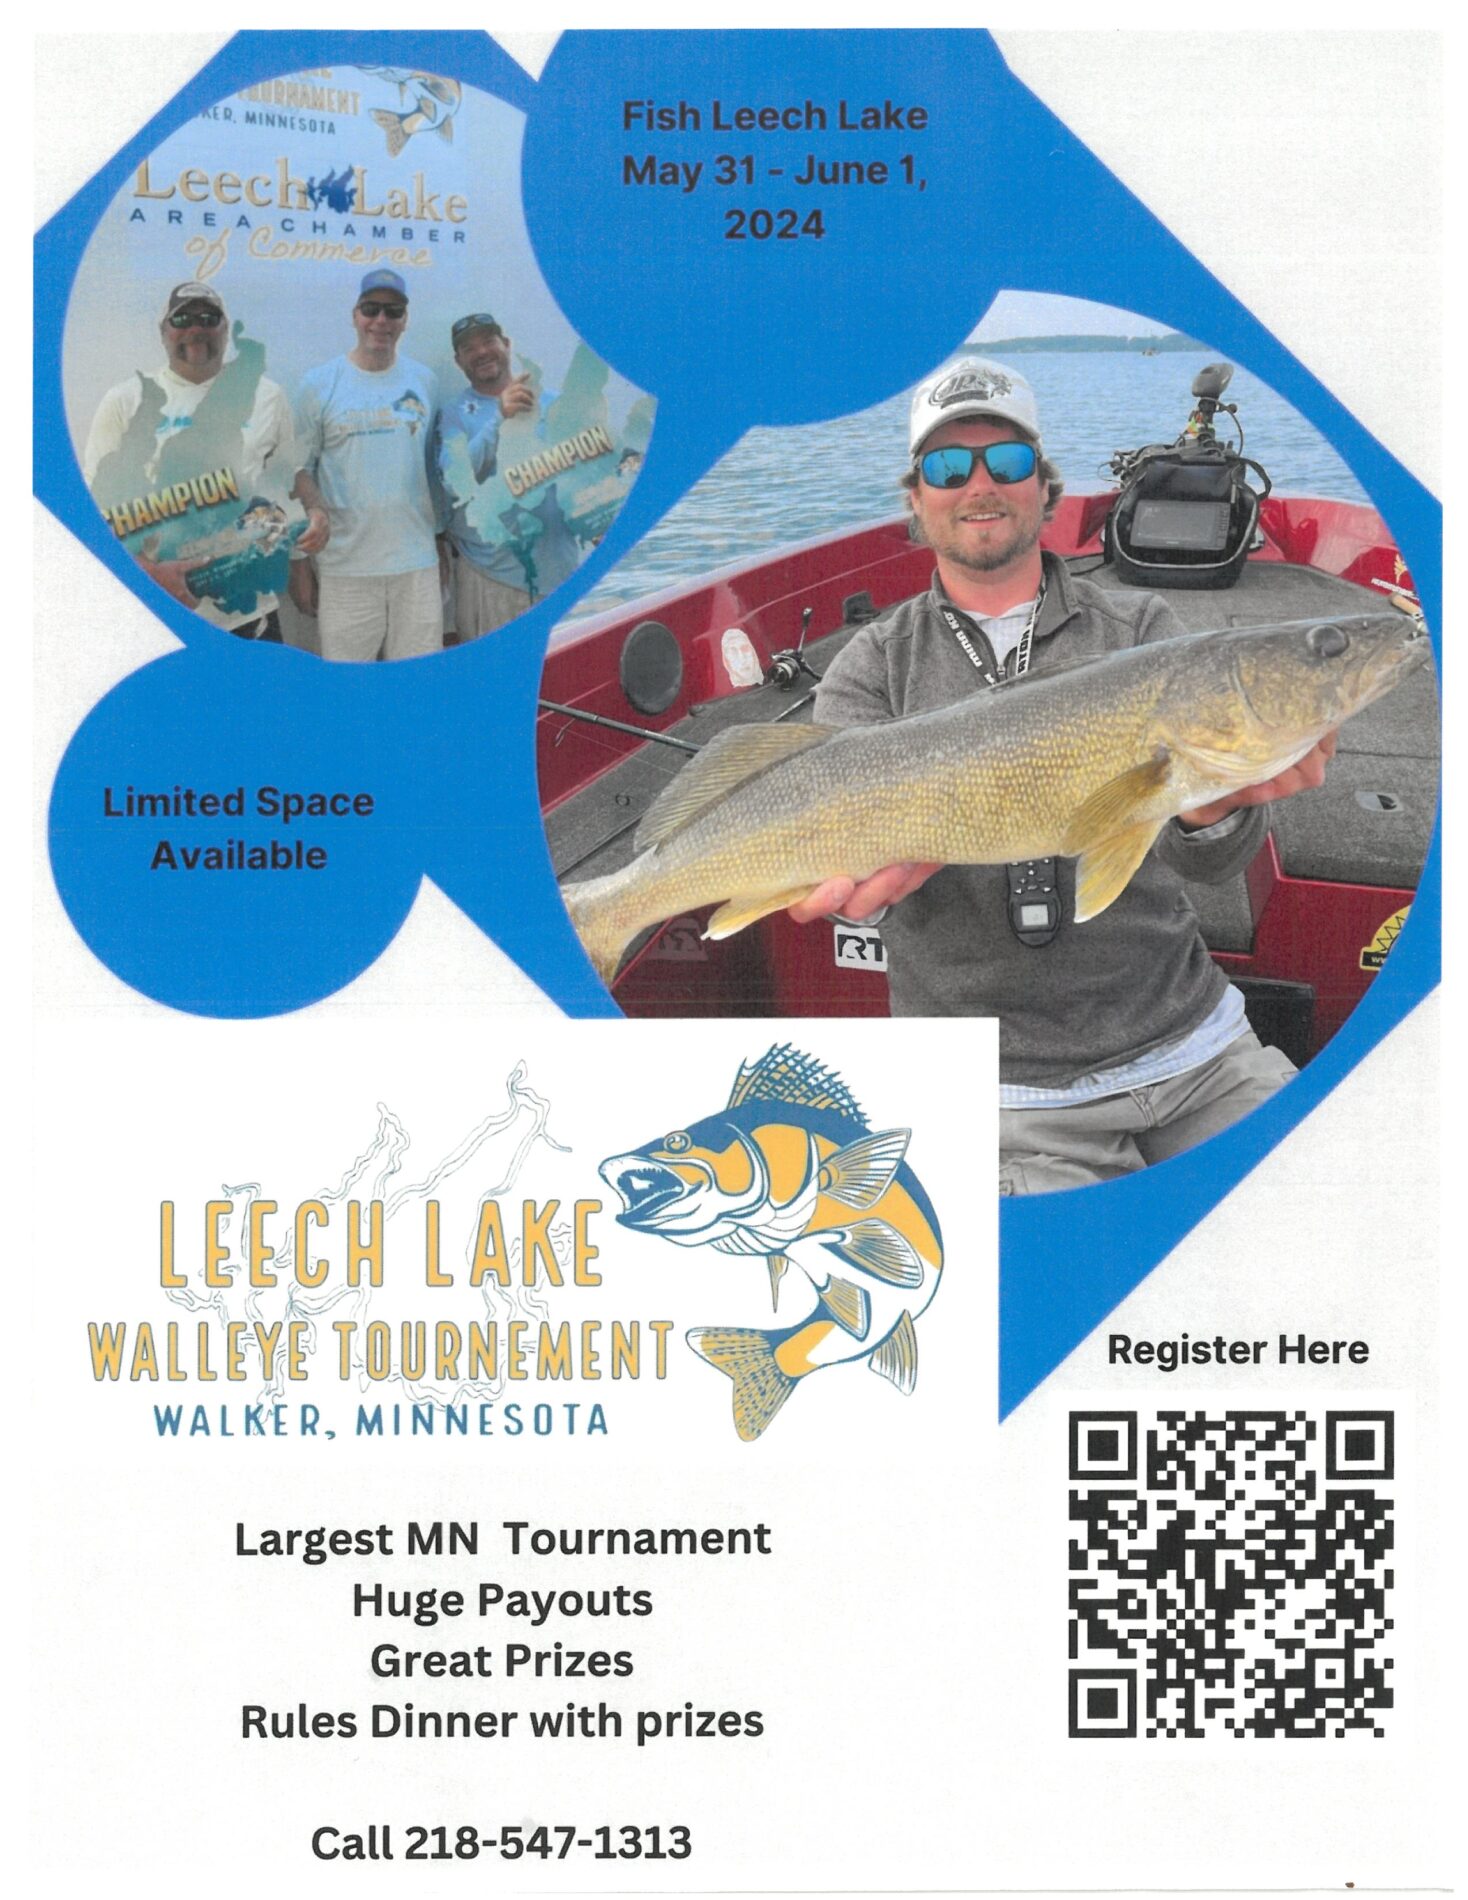 Leech Lake Walleye Tournament -Registration Open